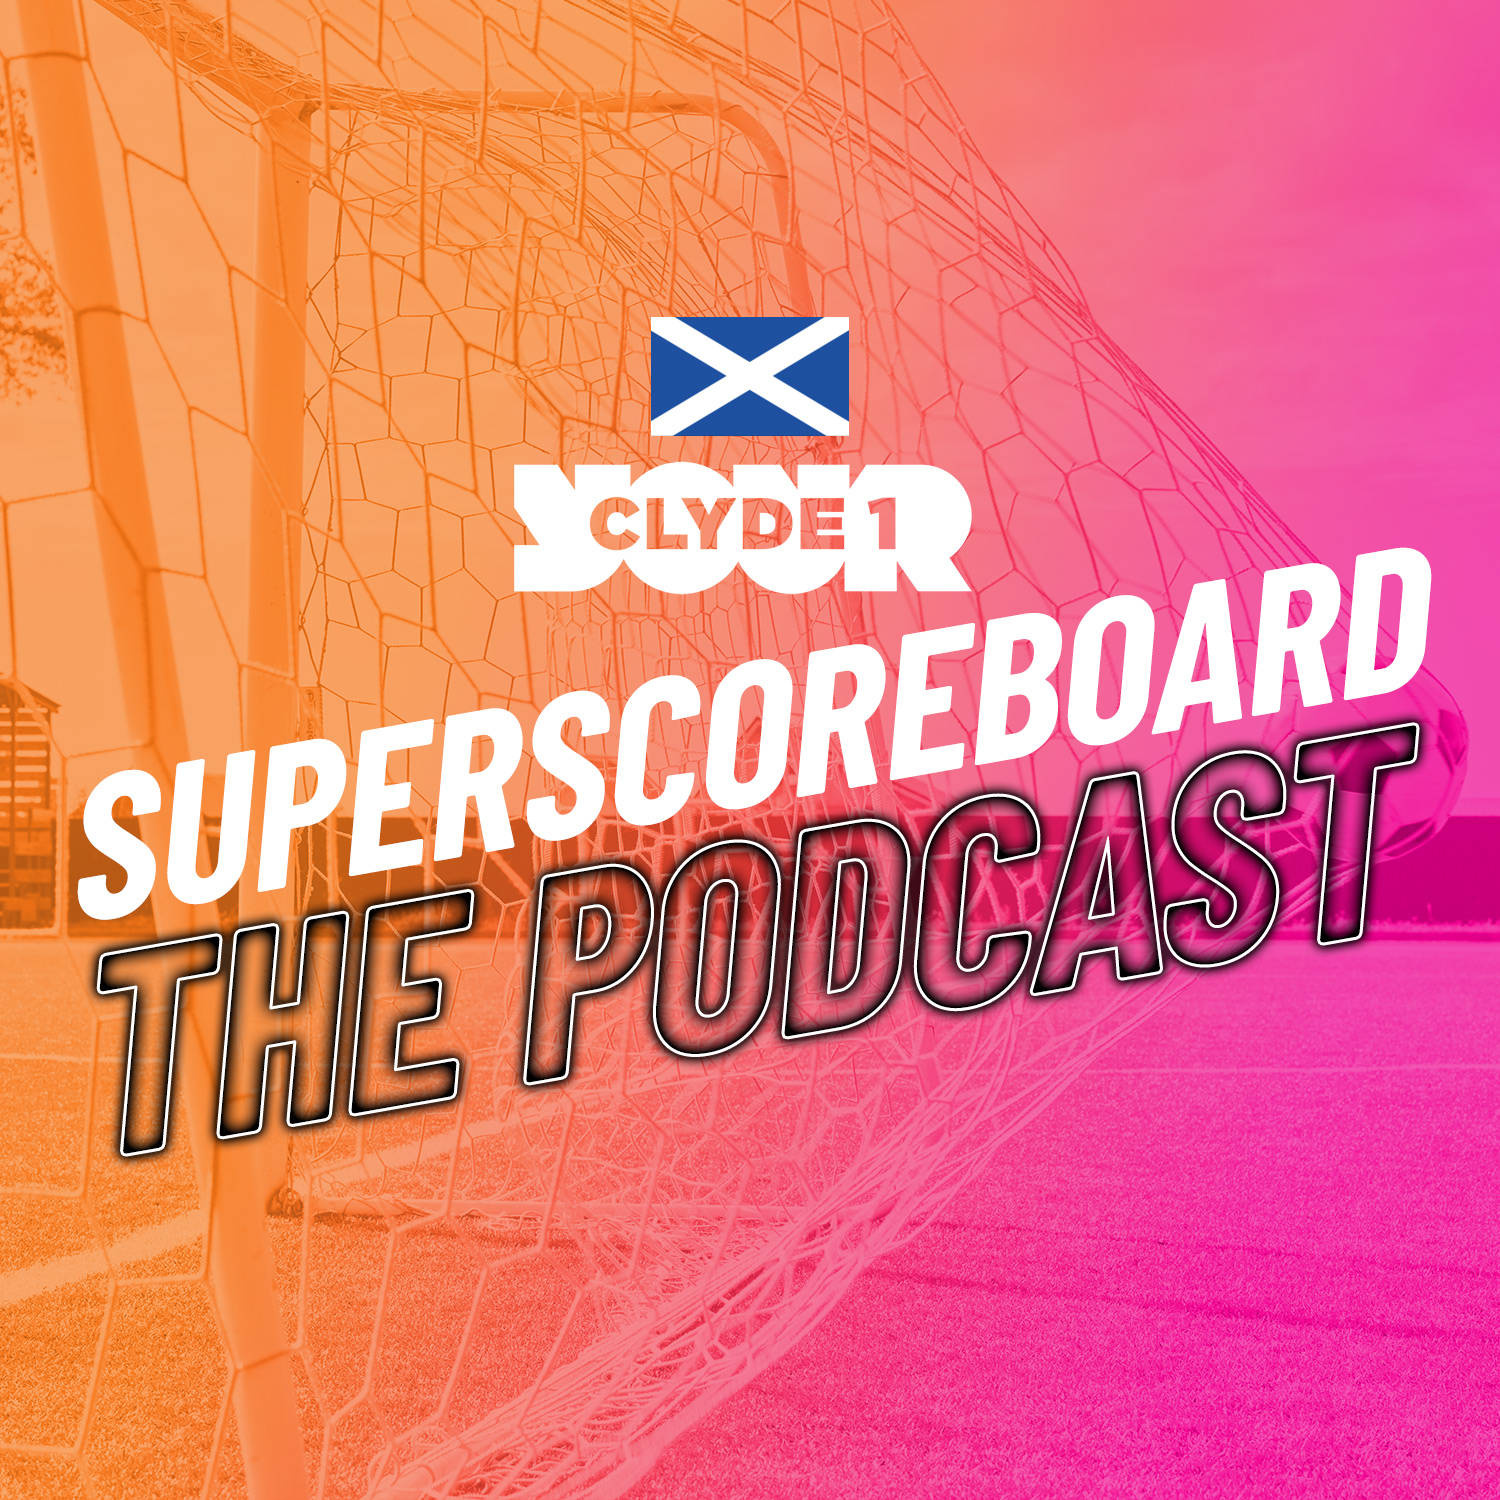 Monday 15th April Clyde 1 Superscoreboard